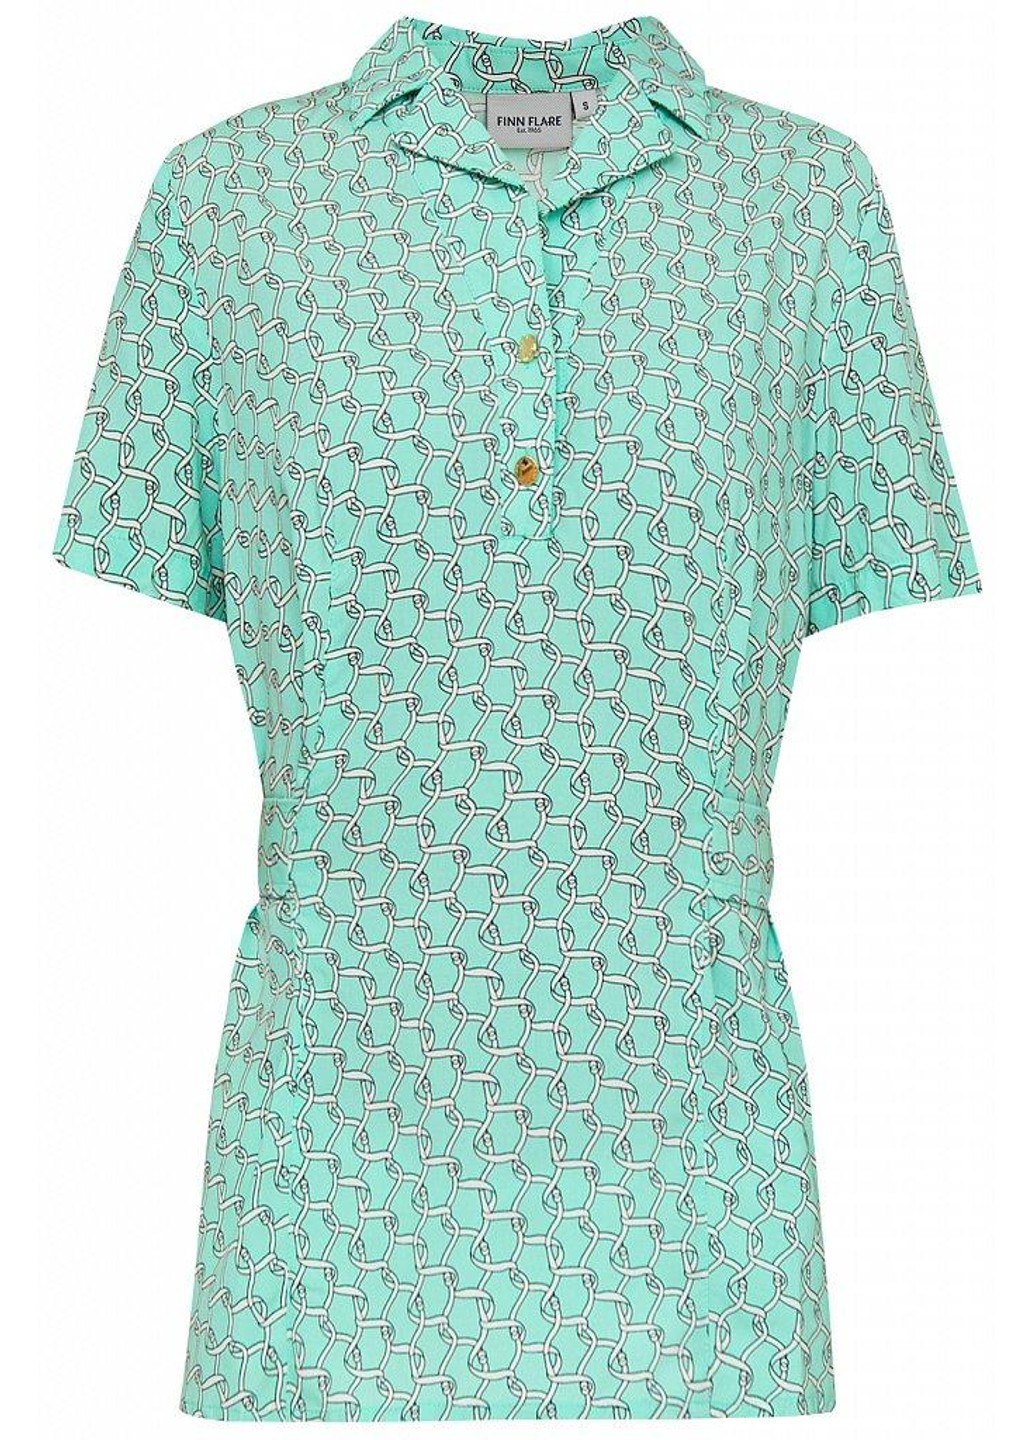 Бірюзова блуза s20-11063-915 Finn Flare